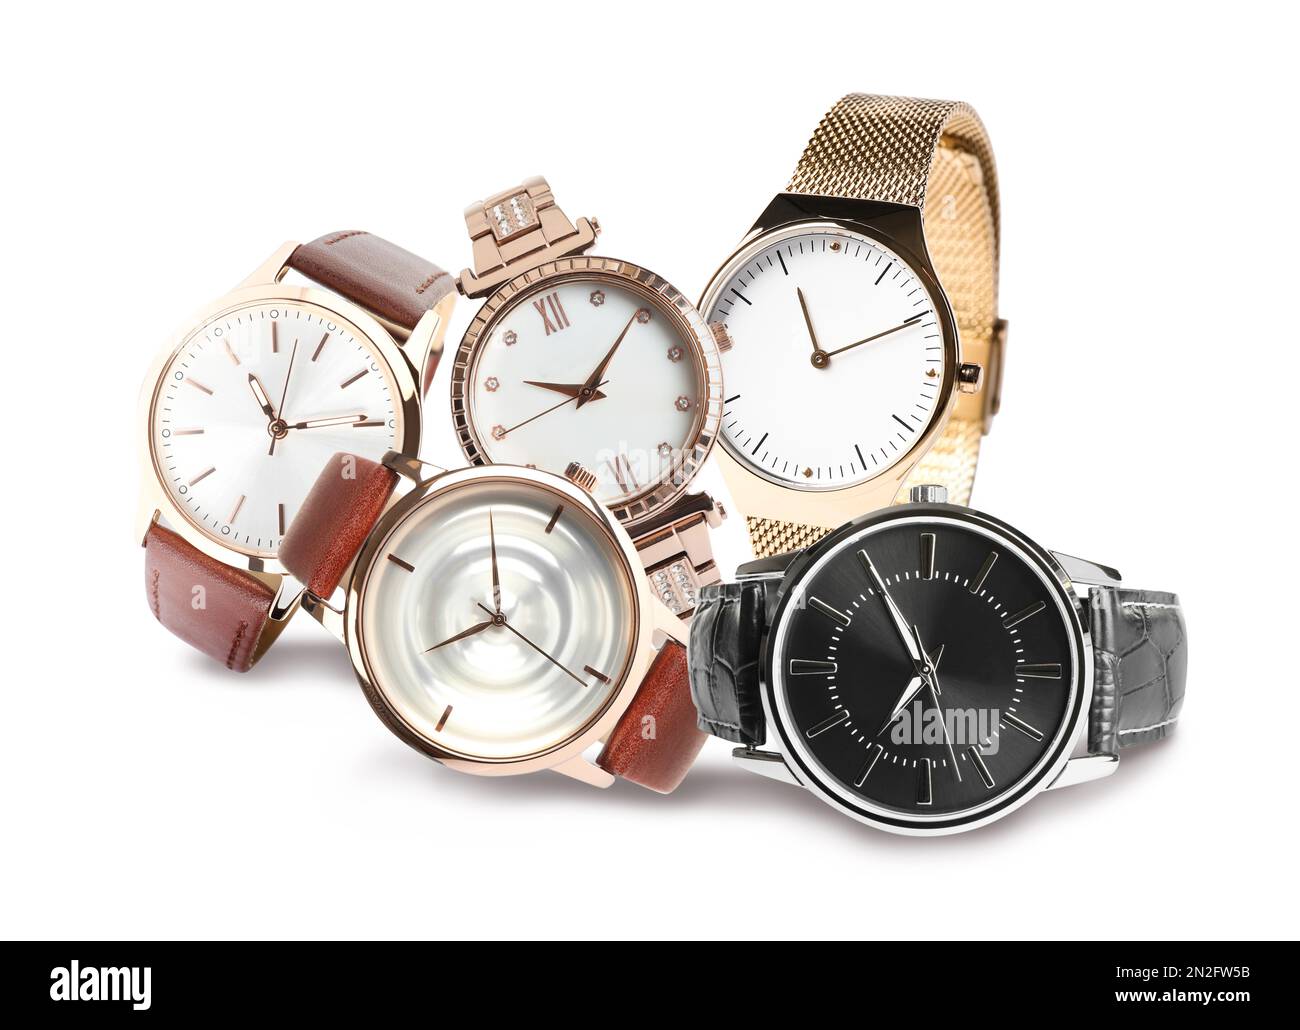 Collage of stylish watches on white background Stock Photo - Alamy